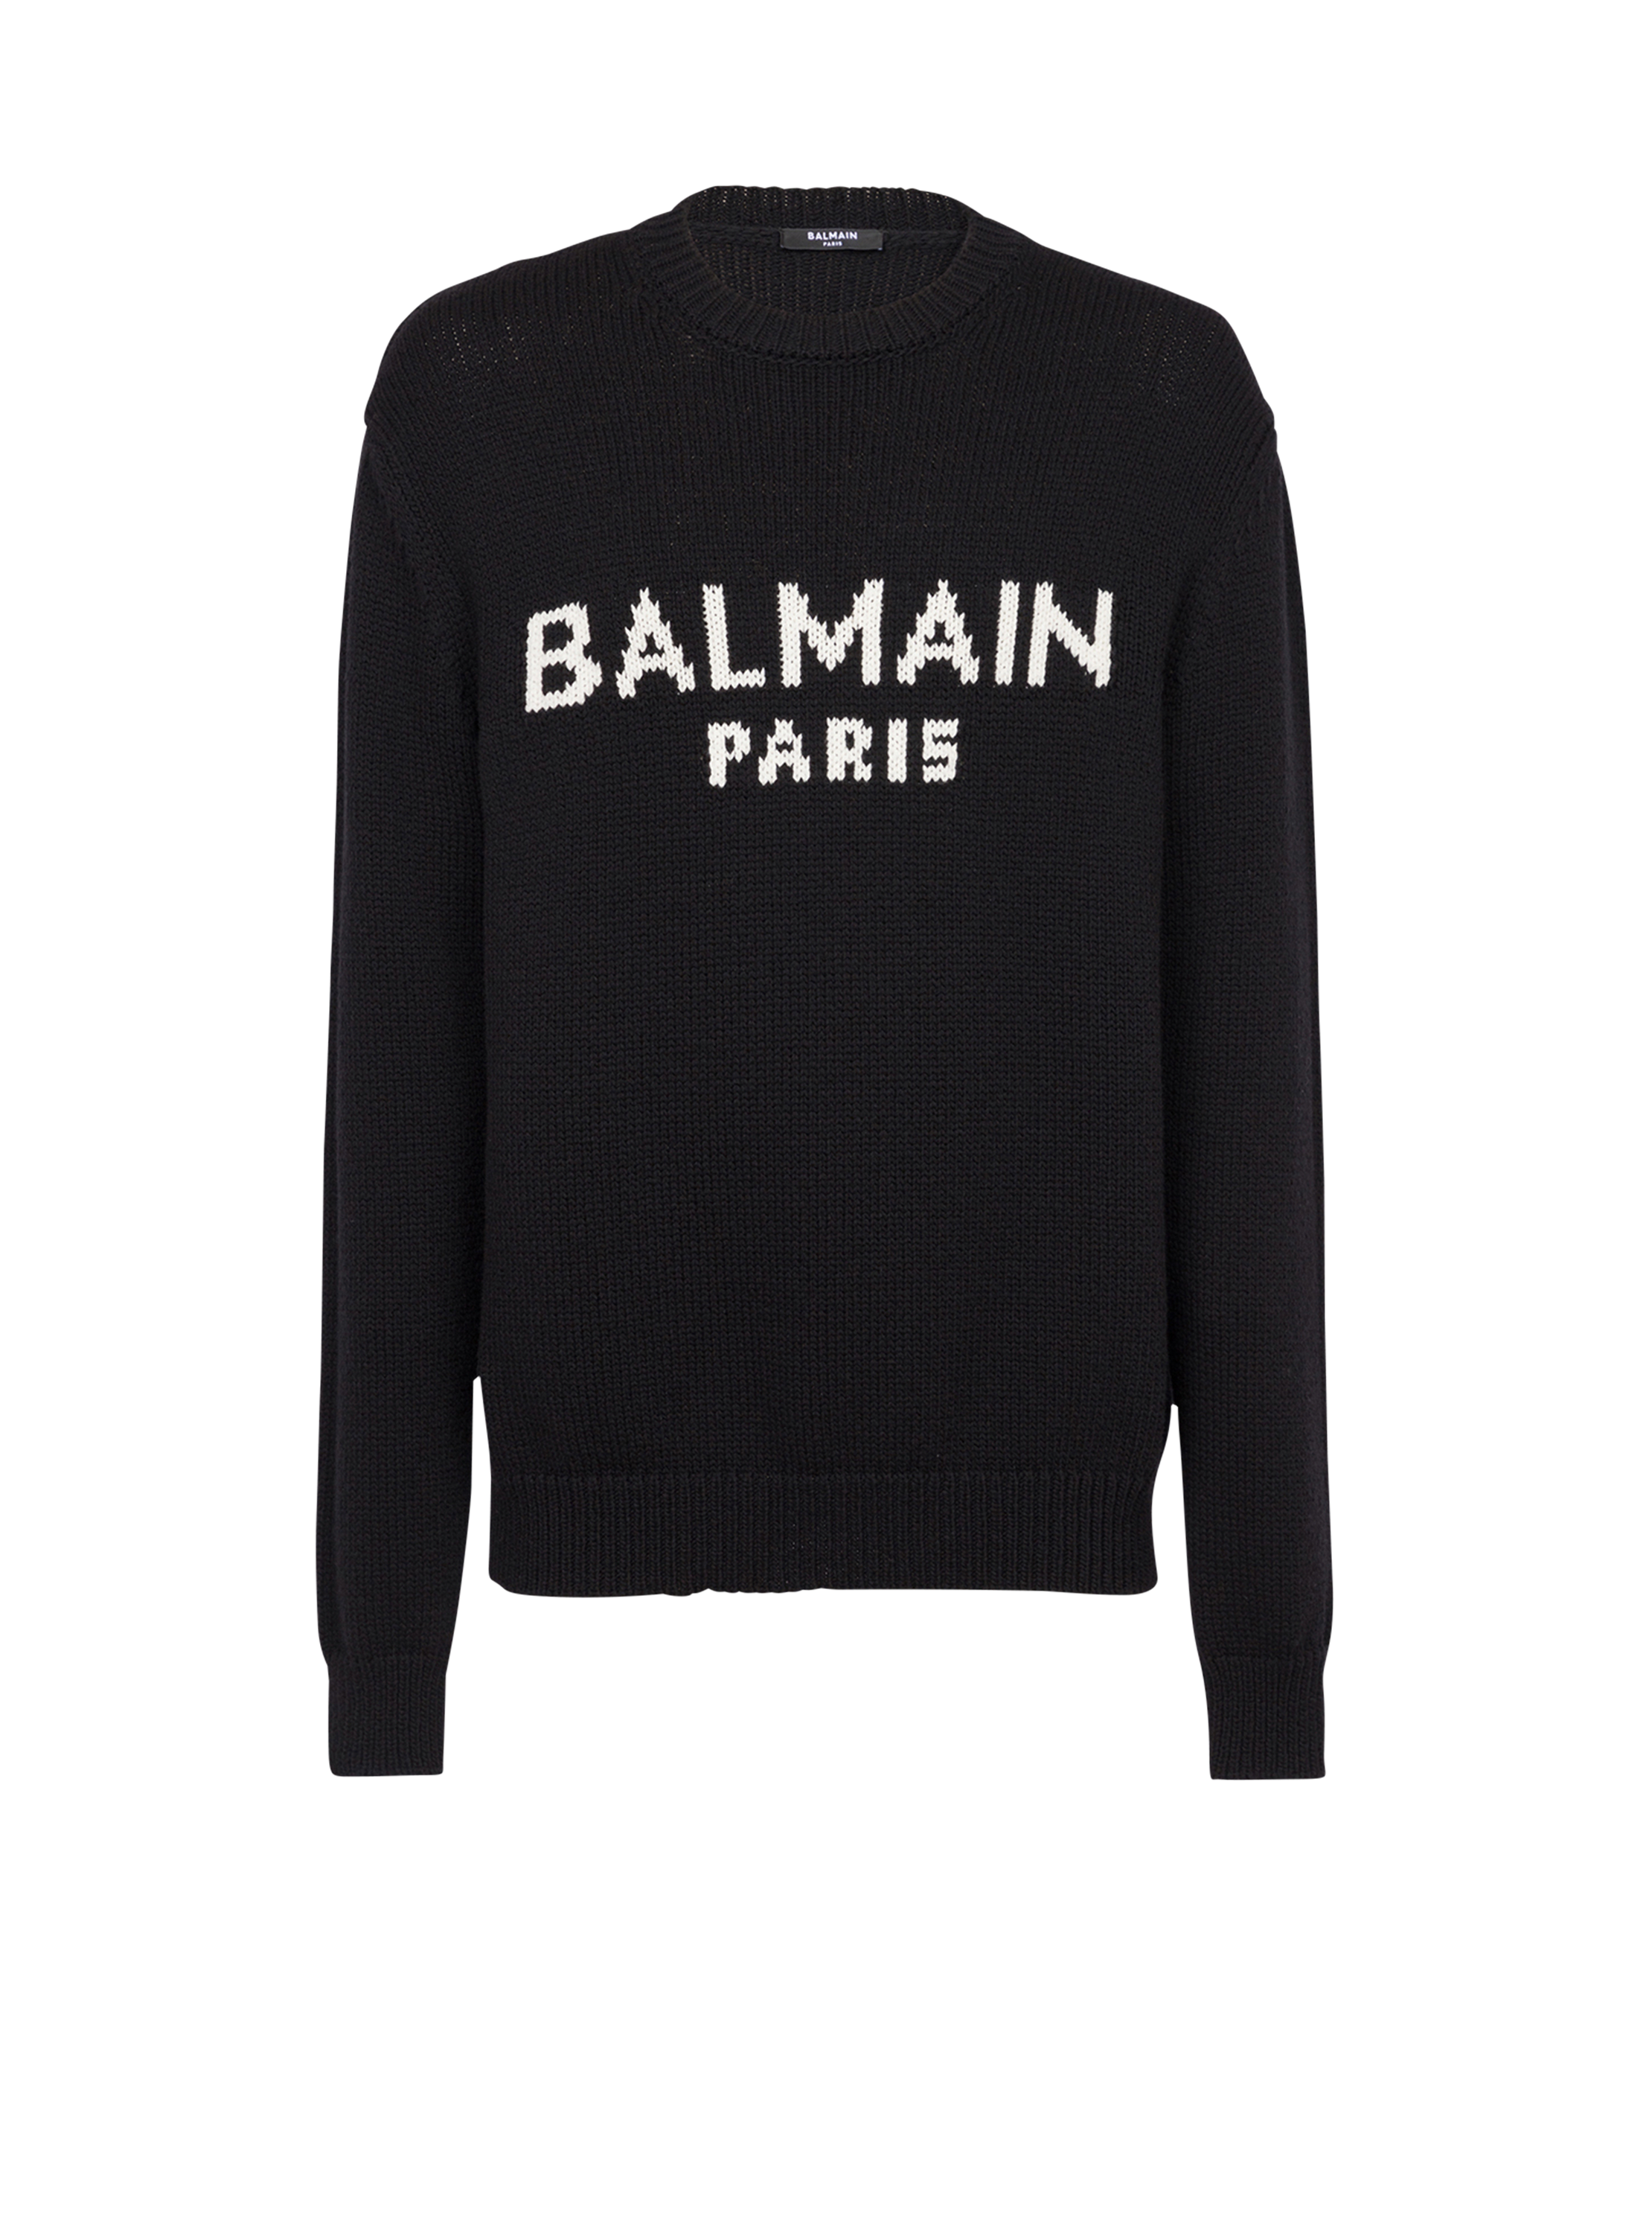 Balmain巴尔曼标志羊毛套头衫